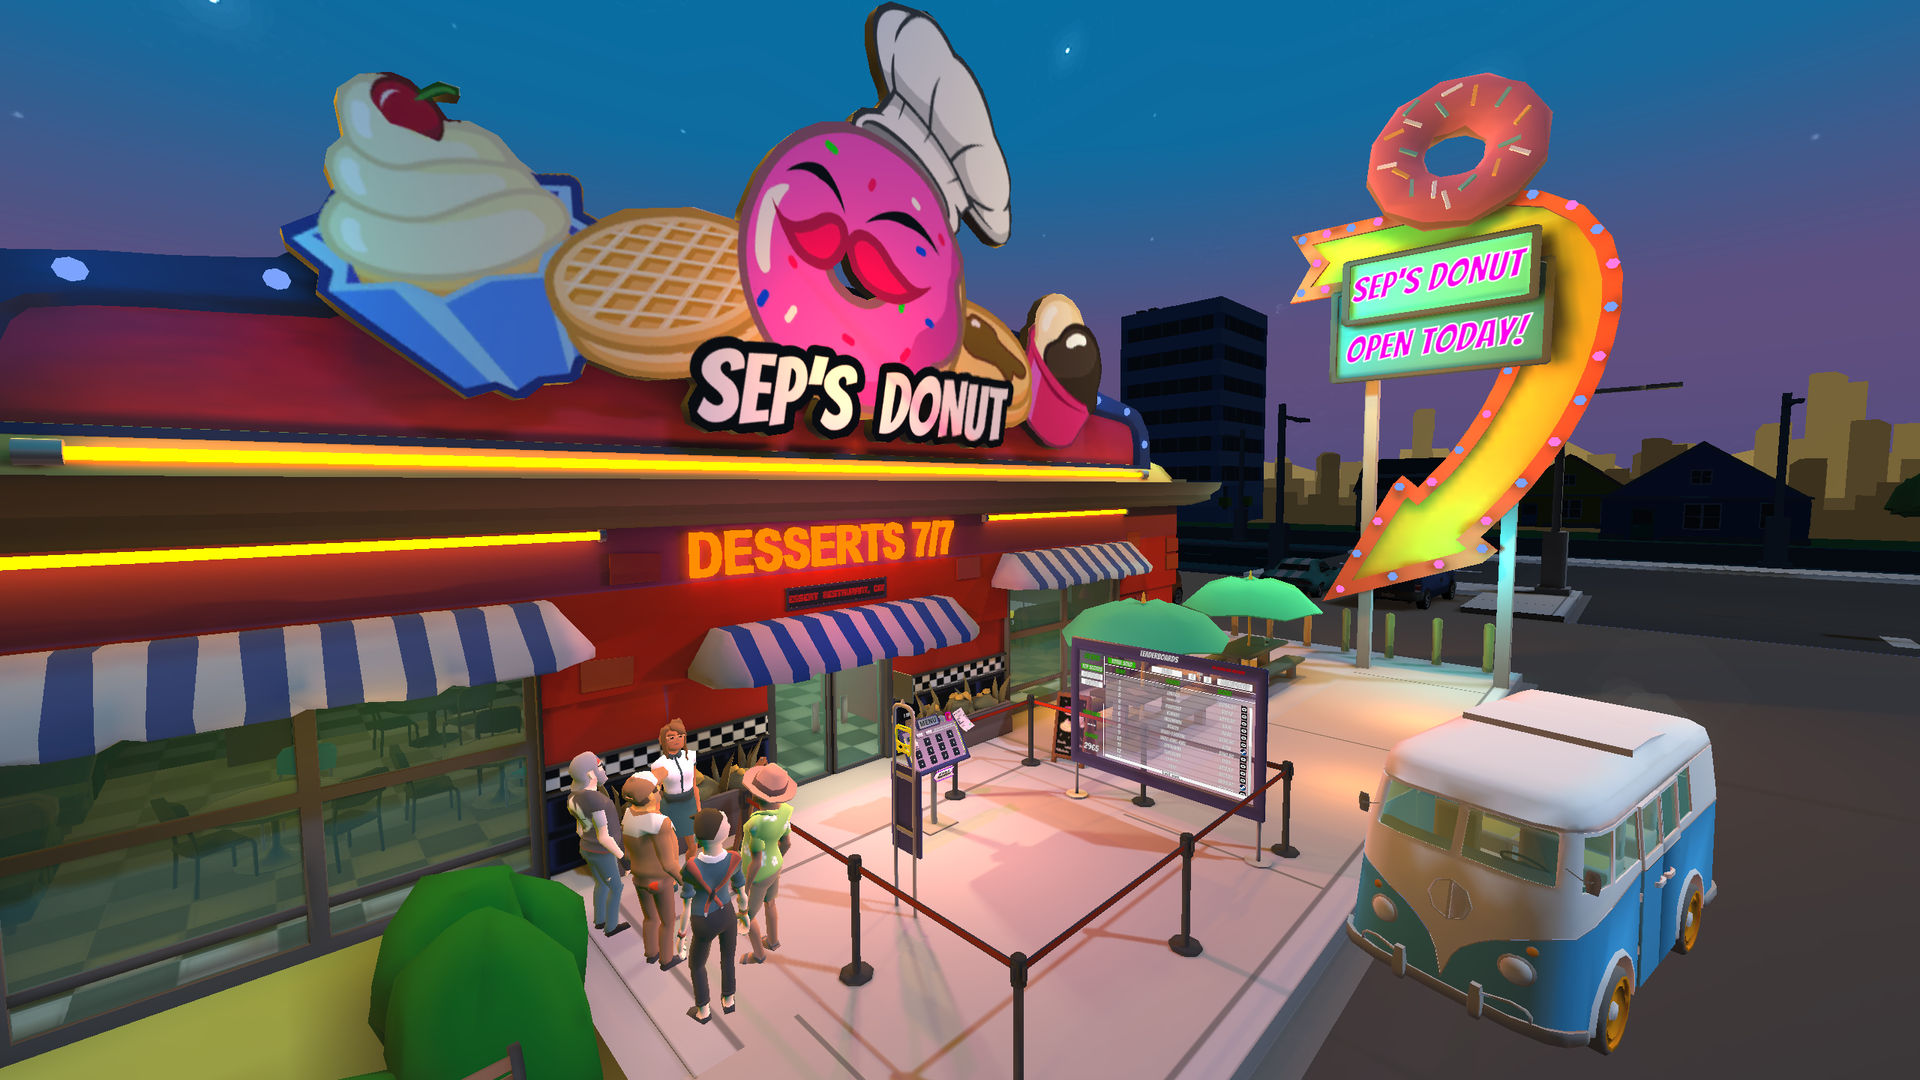 Sep's Diner on Steam